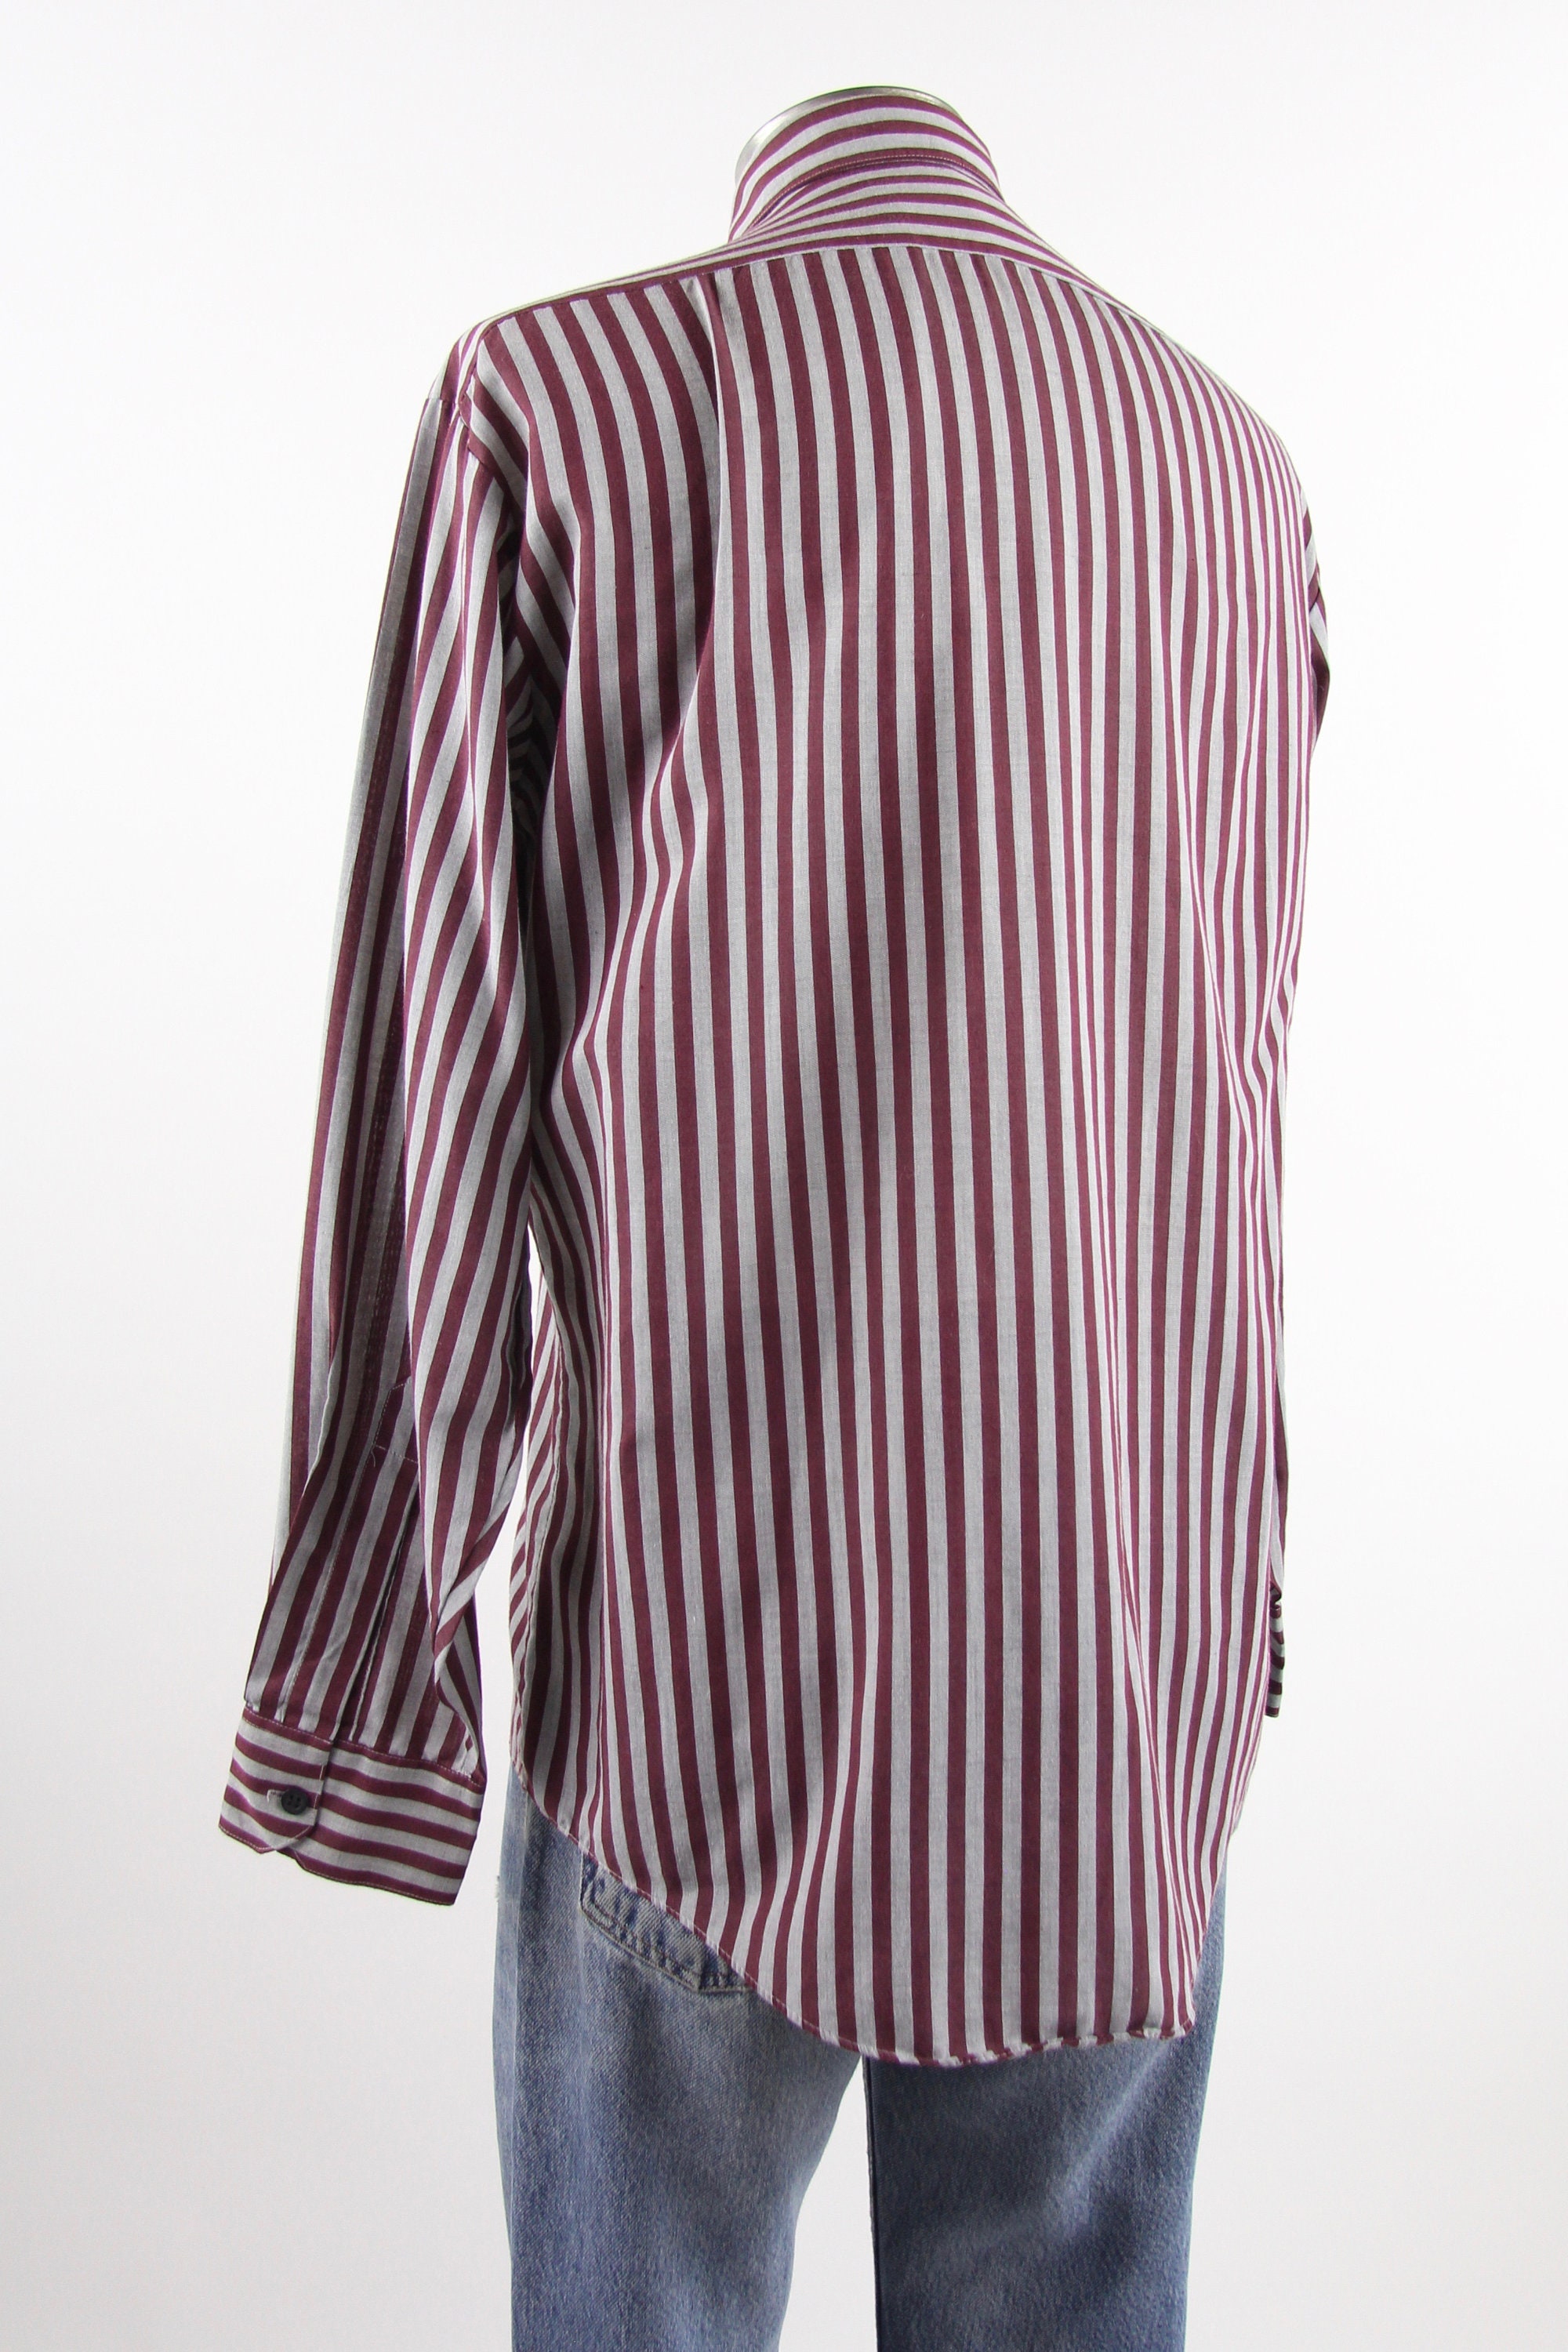 Maroon Striped Shirt Men's Vintage Button Down Dress Shirt Size Medium